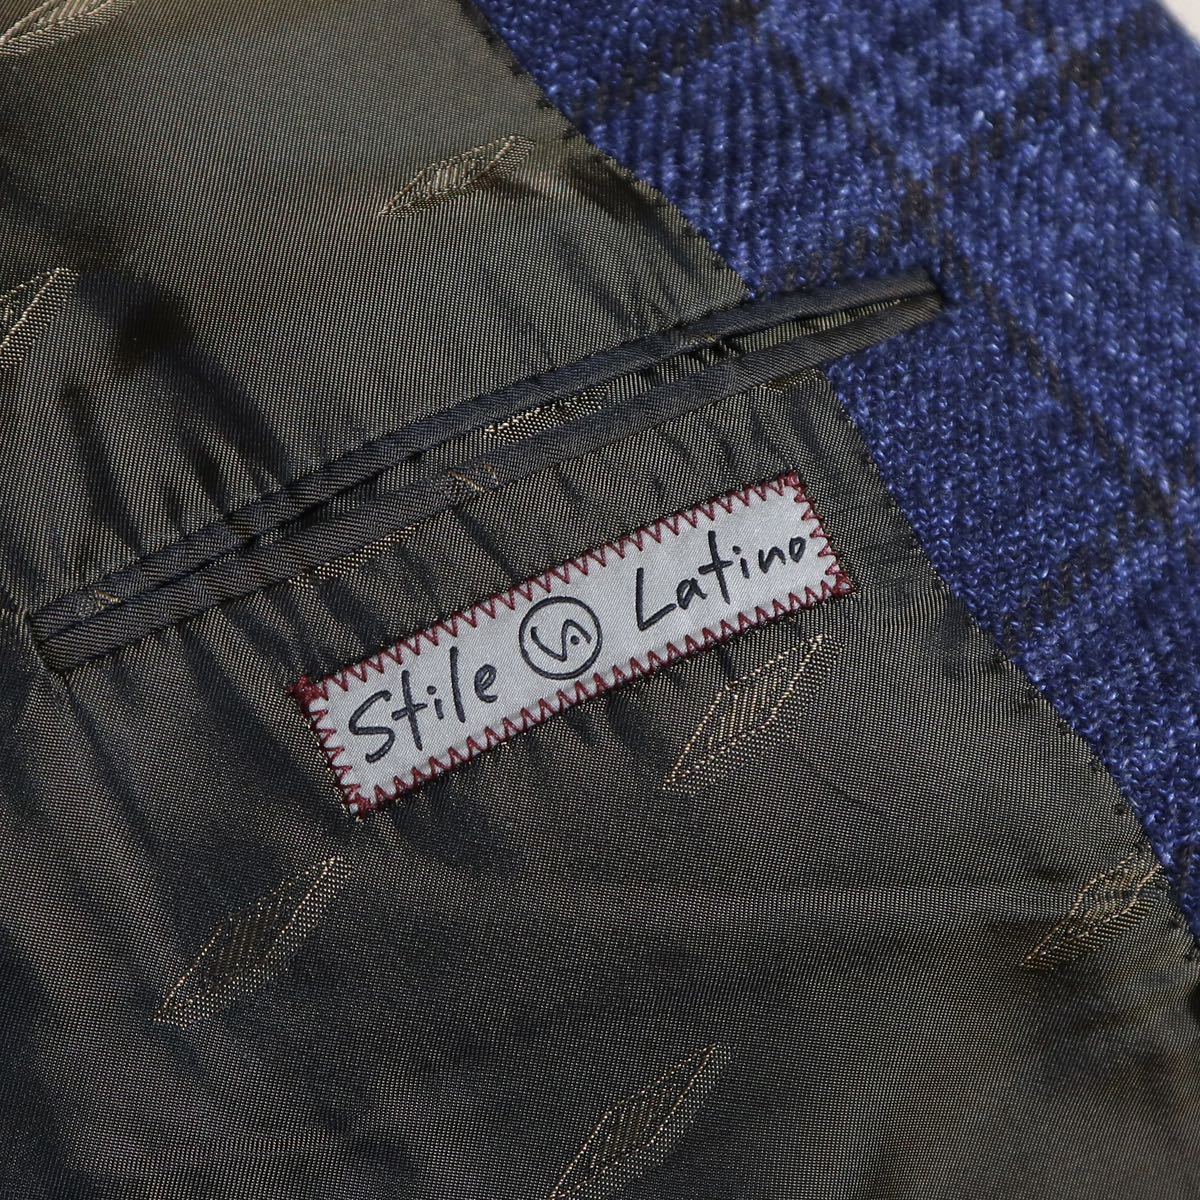 STILE LATINO ダブルジャケット 40(42) ネイビー 正規品 スティレ ラティーノ スーツ テーラードジャケット_画像7